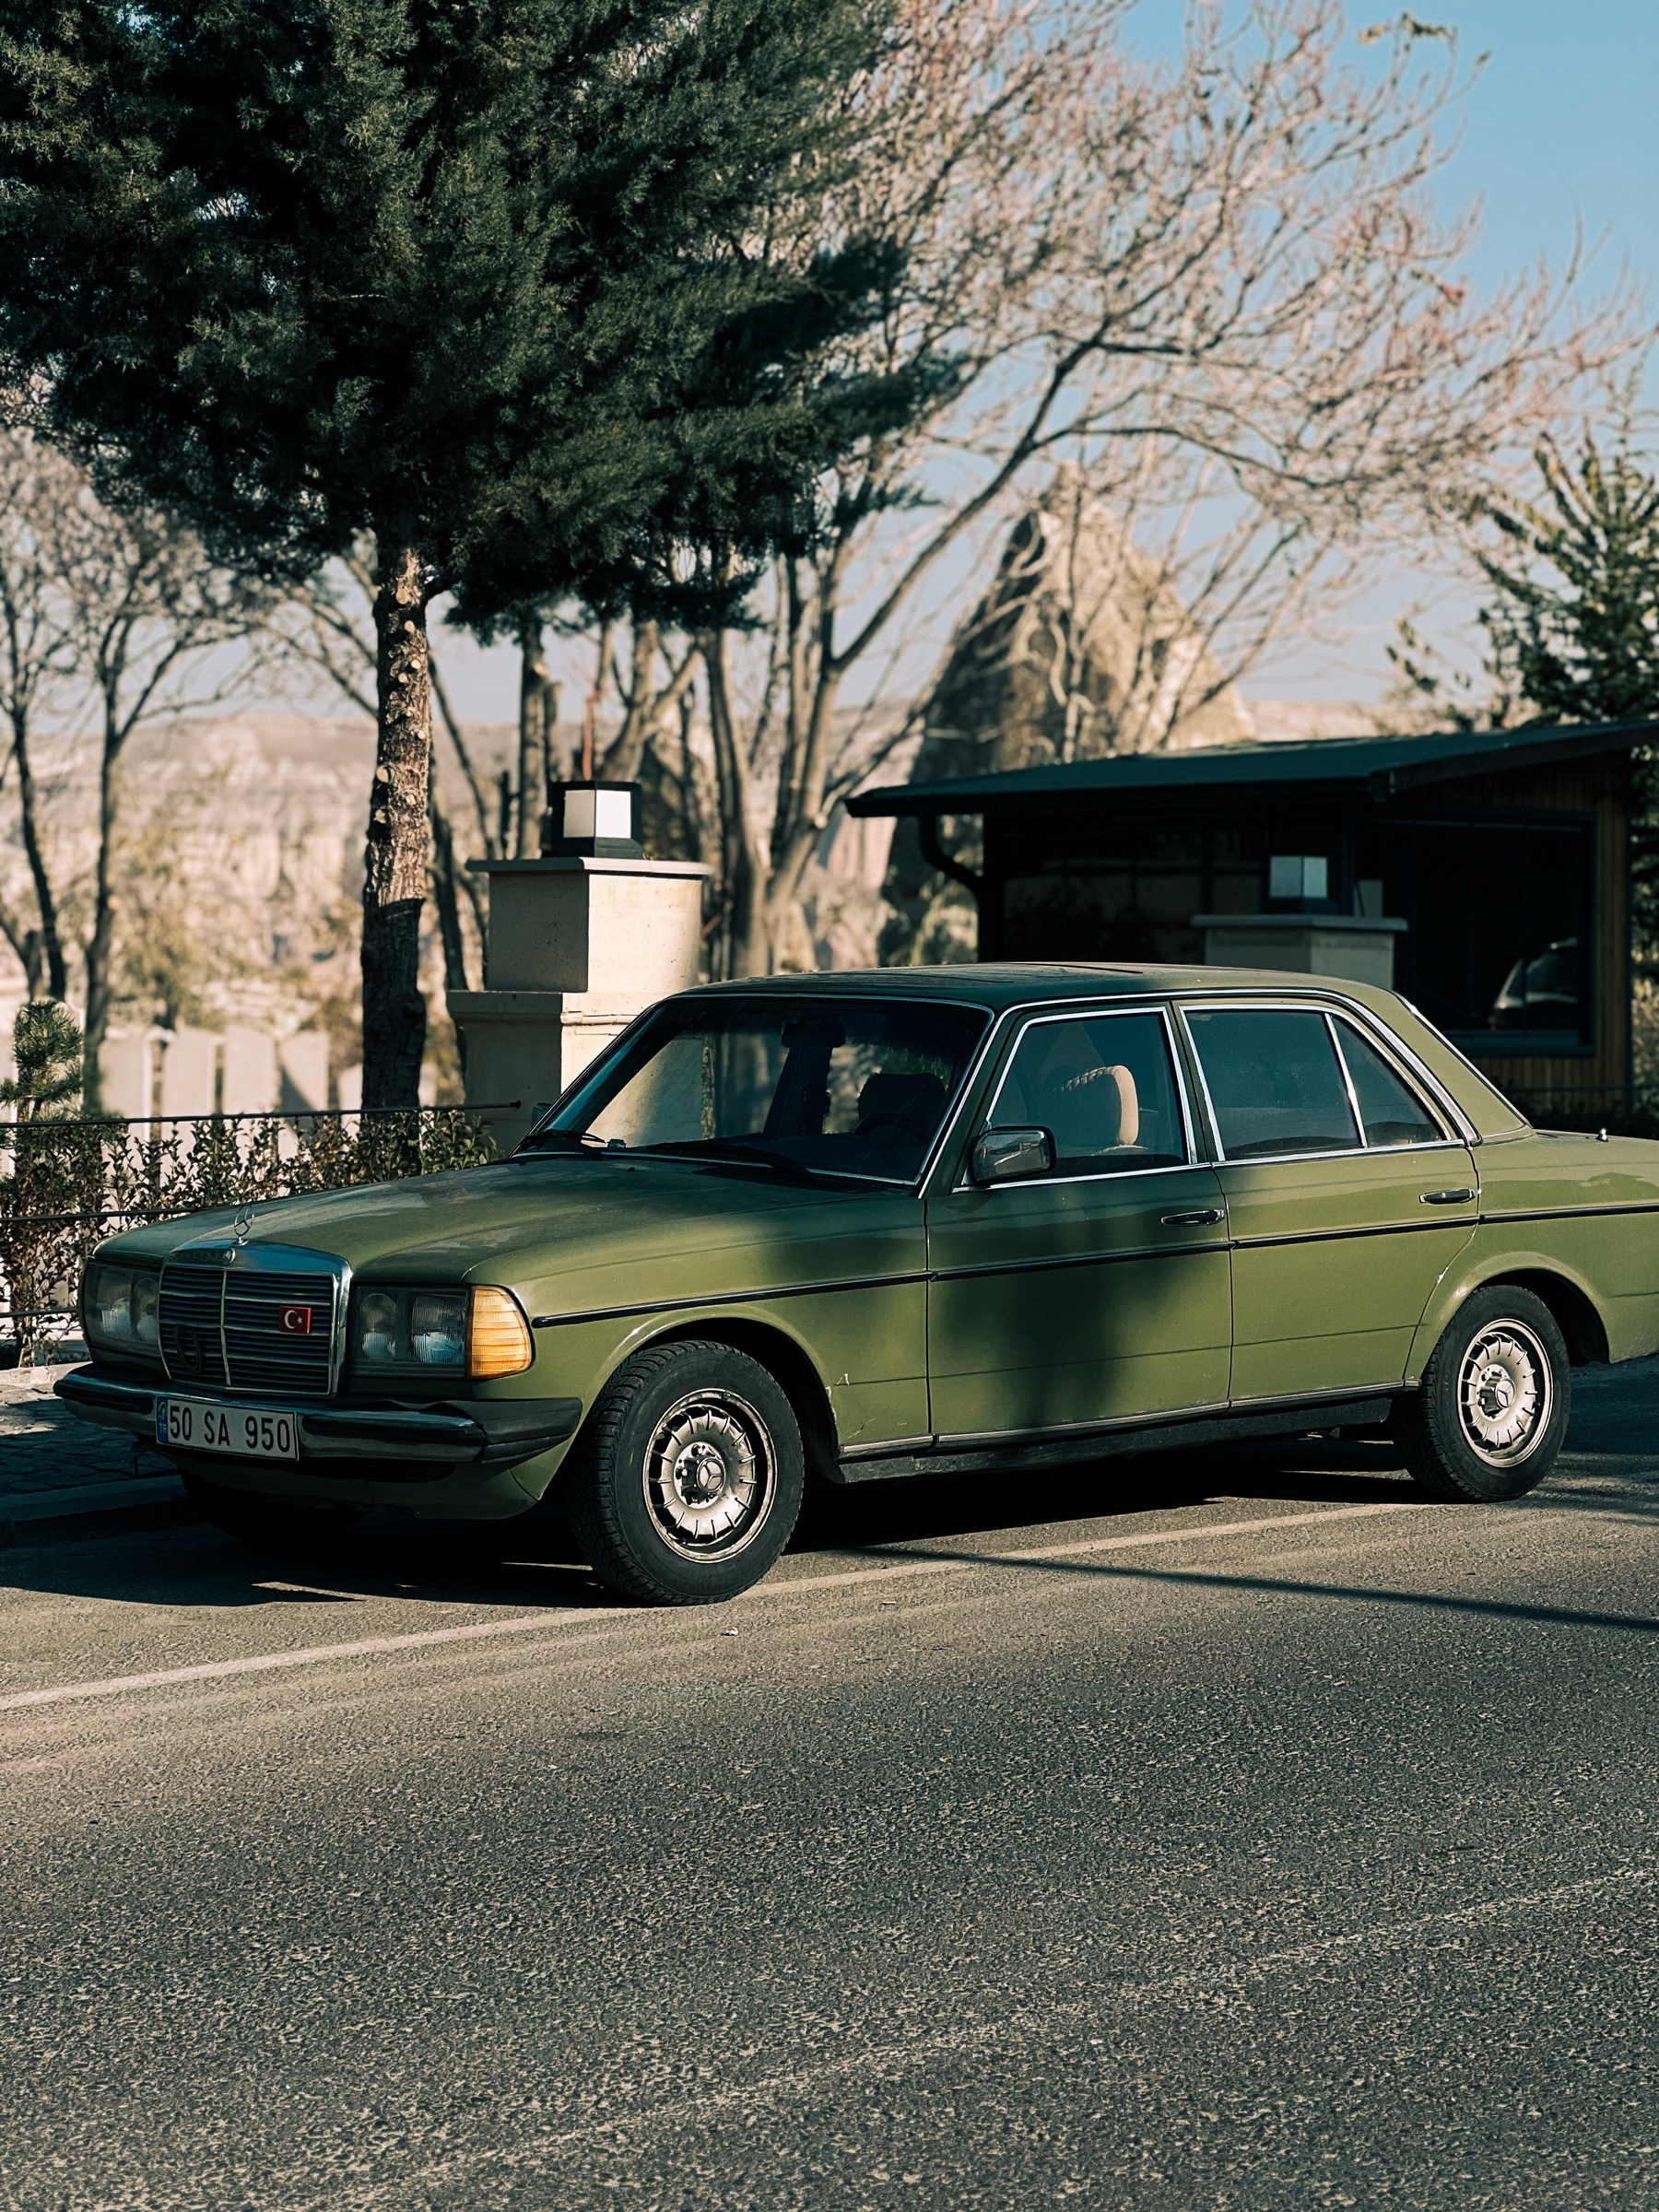 A green vintage Benz. 